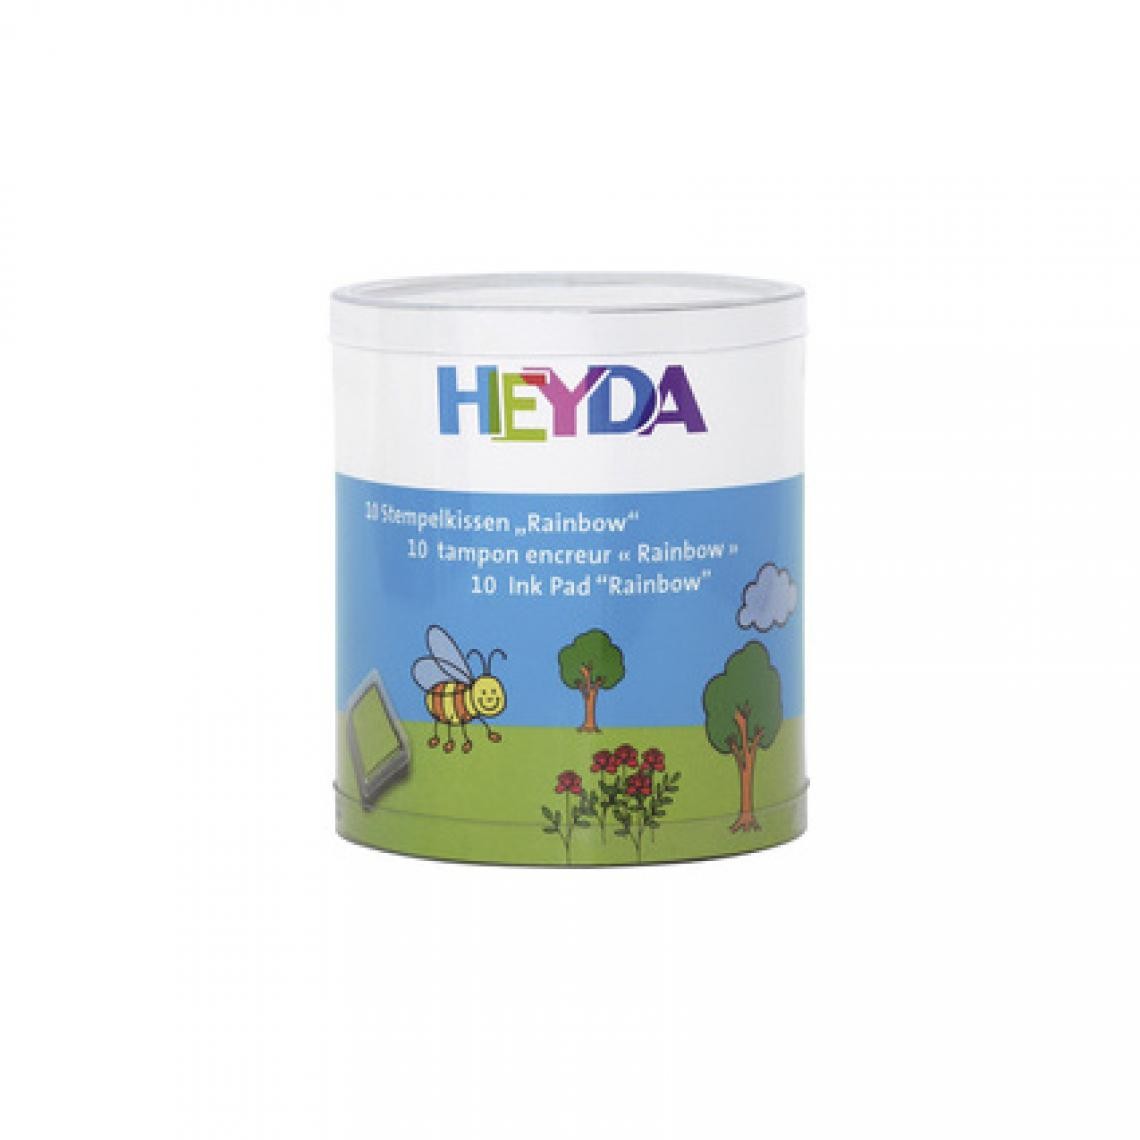 Heytec Heyco - HEYDA Set de tampons encreurs 'Rainbow', boîte transparente () - Bricolage et jardinage